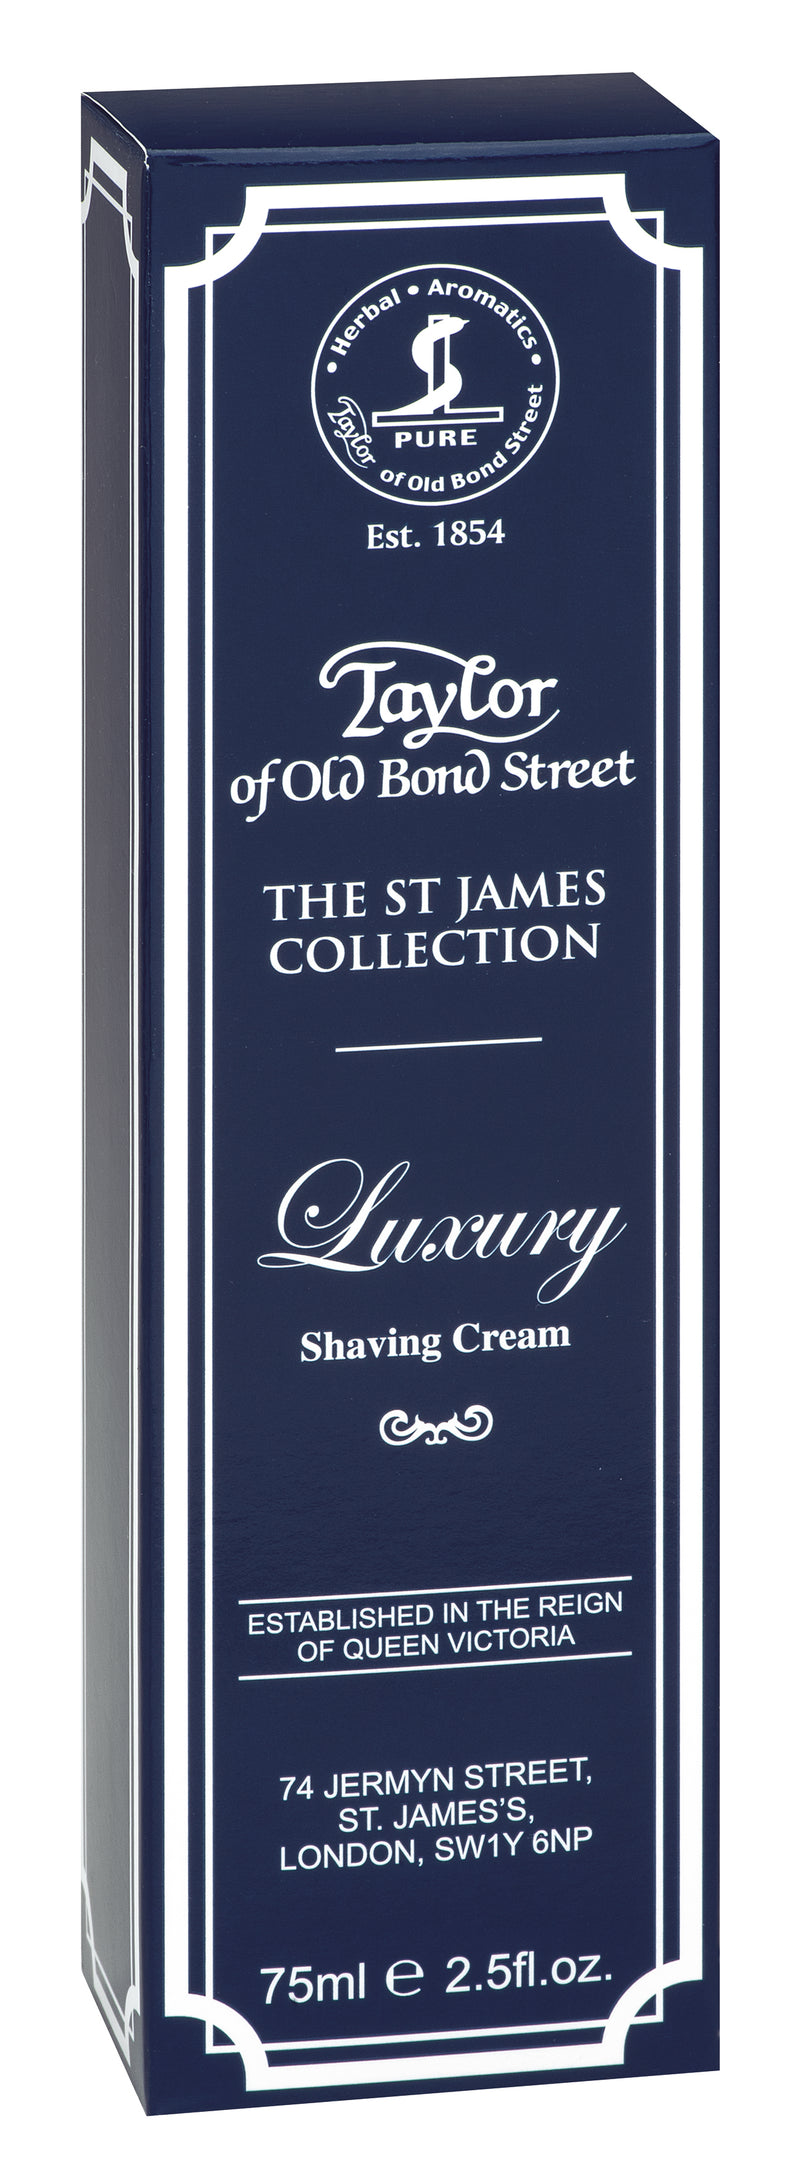 Taylor St. James Shaving Cream Tube